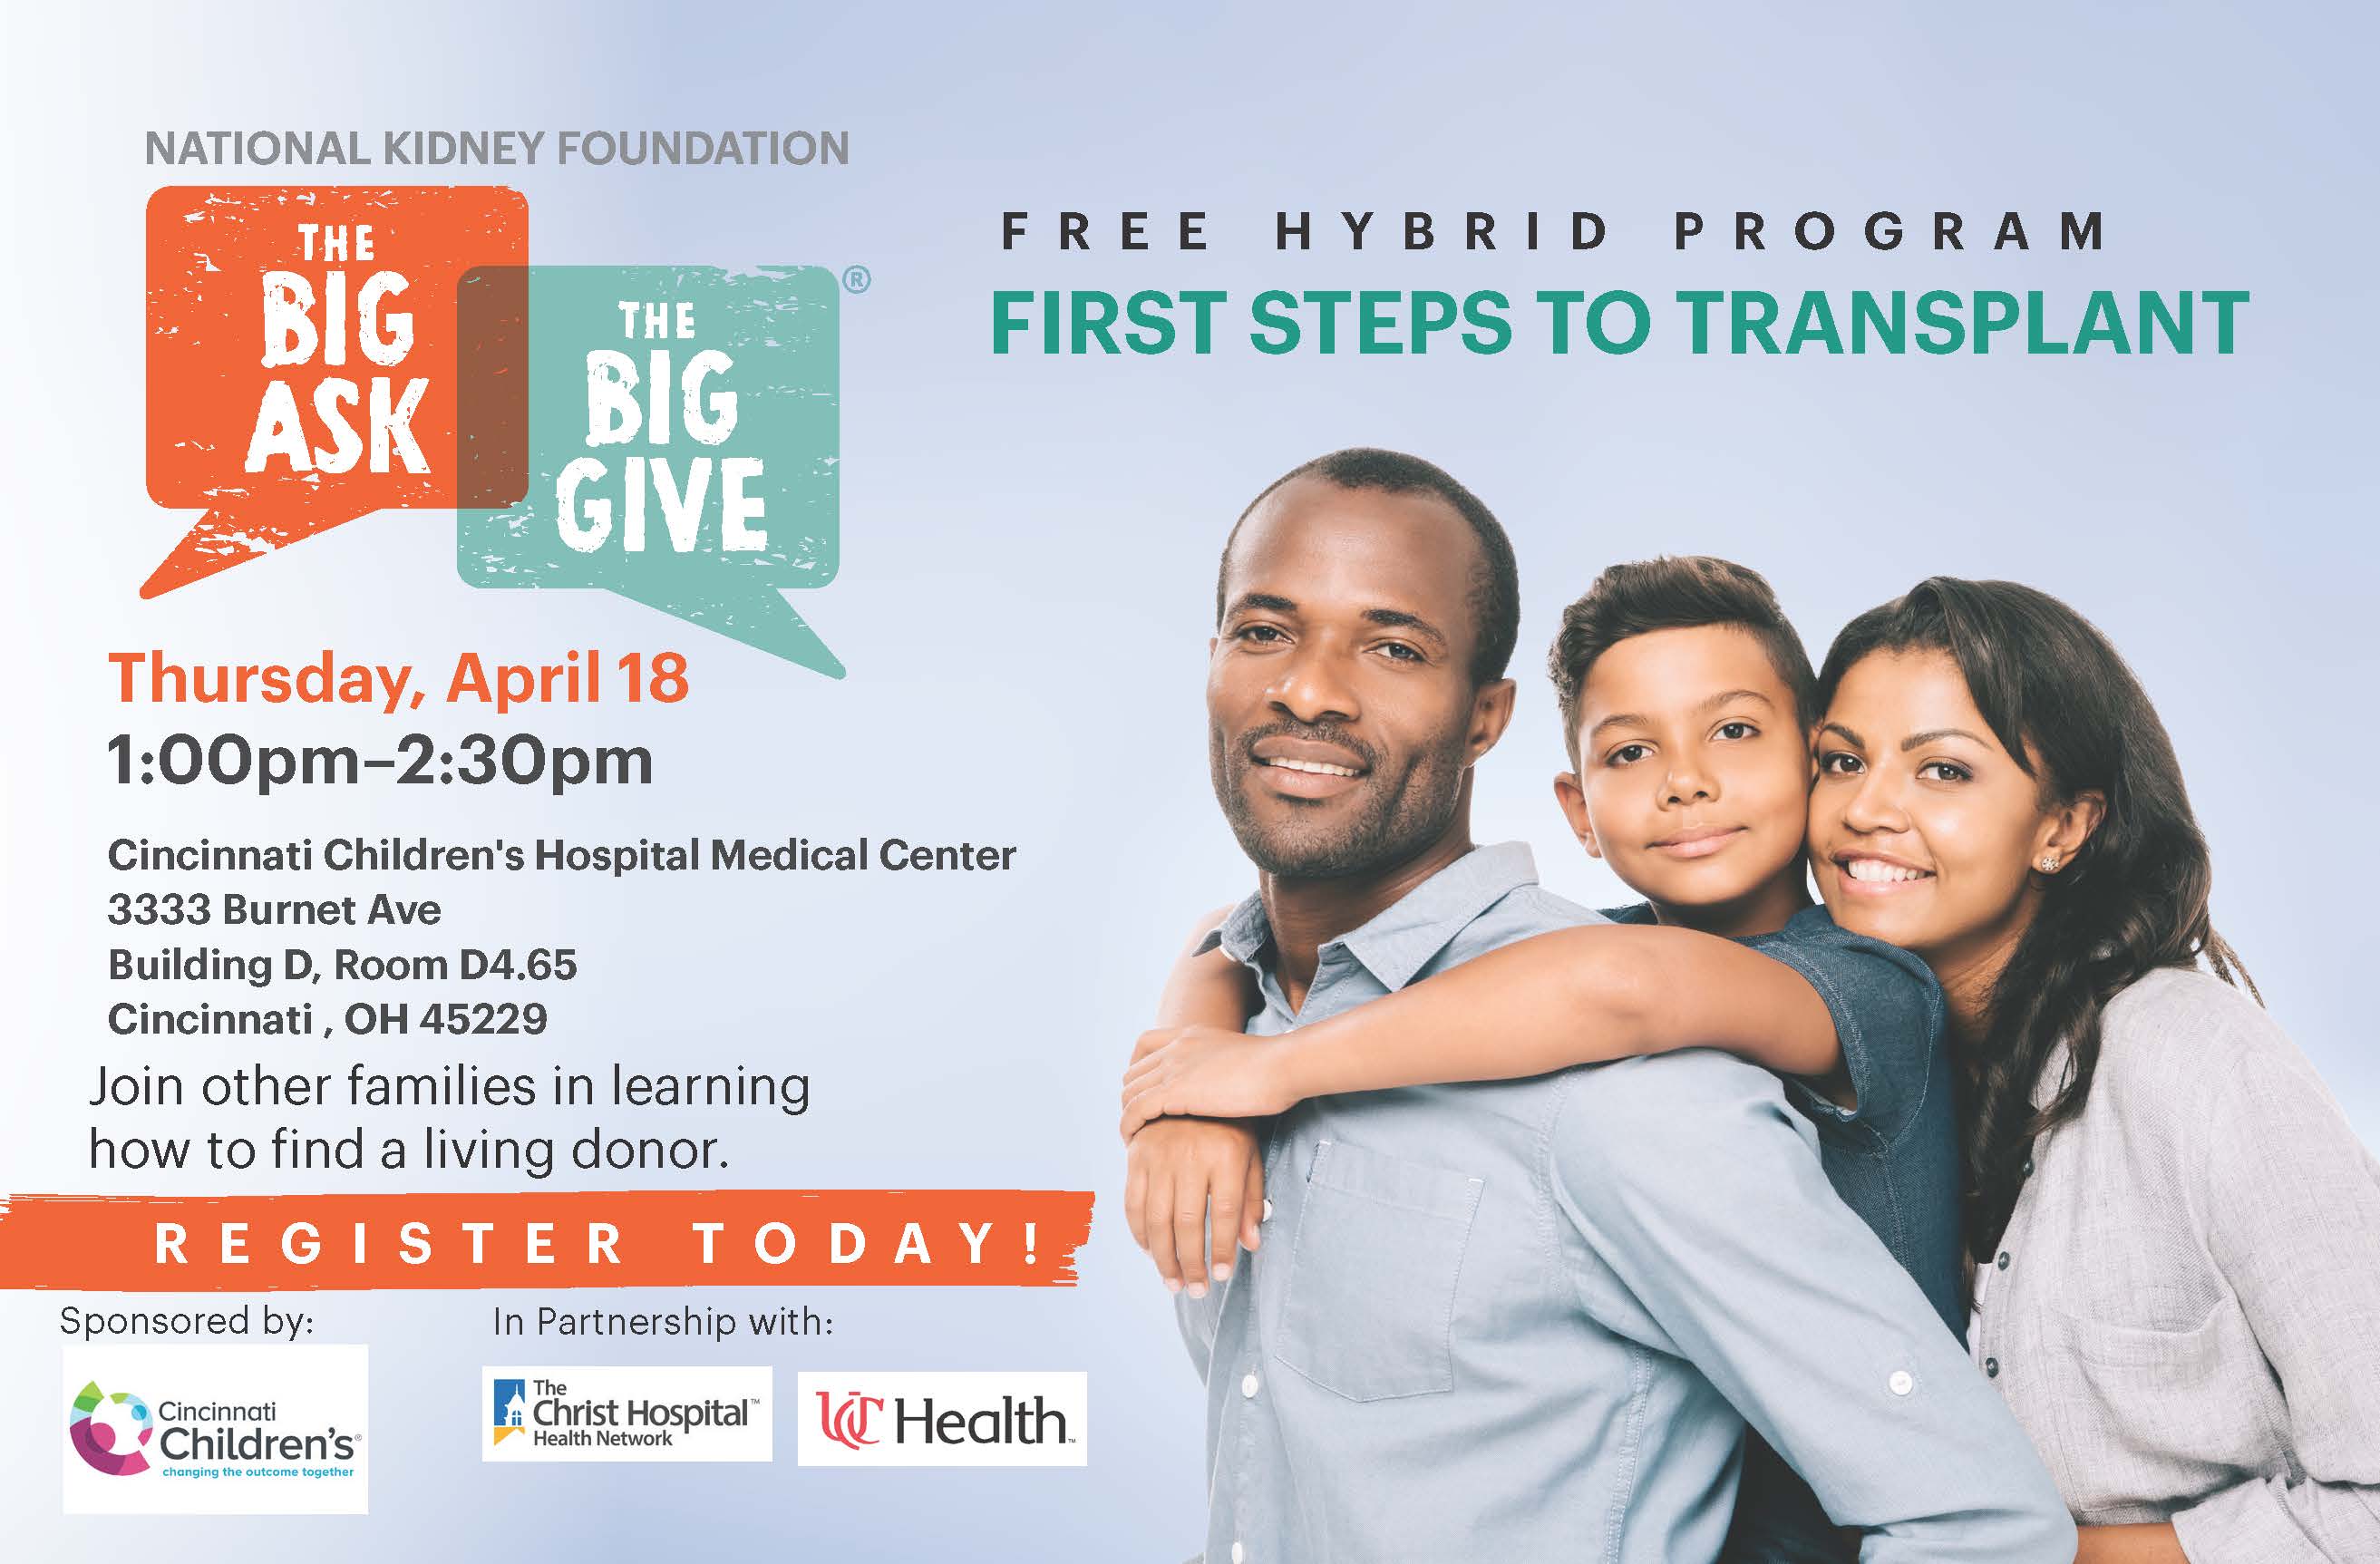 The Big Ask: The Big Give at Cincinnati Children's Hospital Medical Center on April 18th in Cincinnati, Ohio